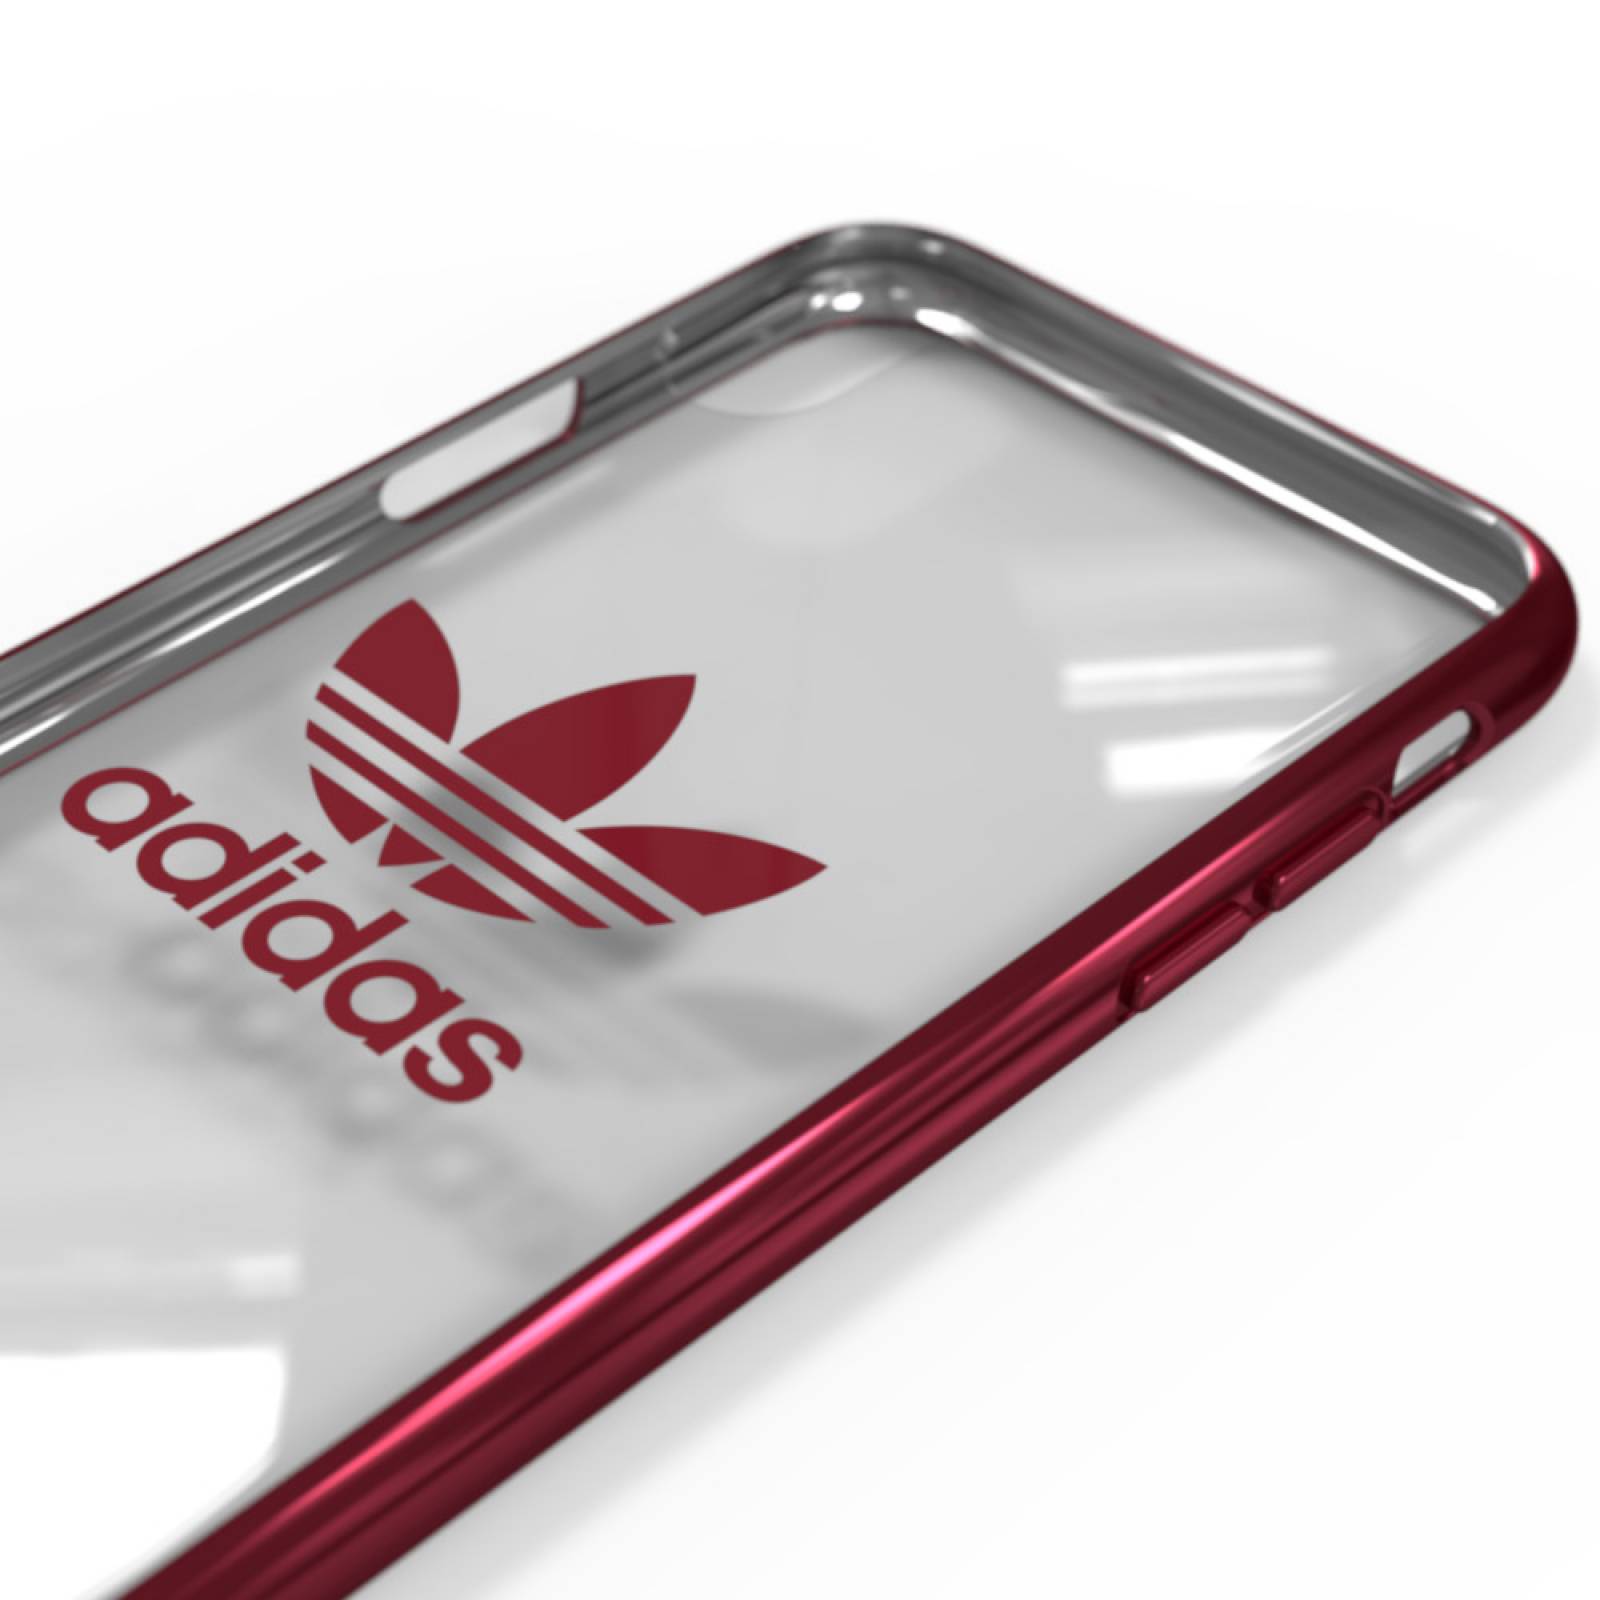 Funda Trefoil Adidas Originals iPhone XS y X Transparente Logo Rojo